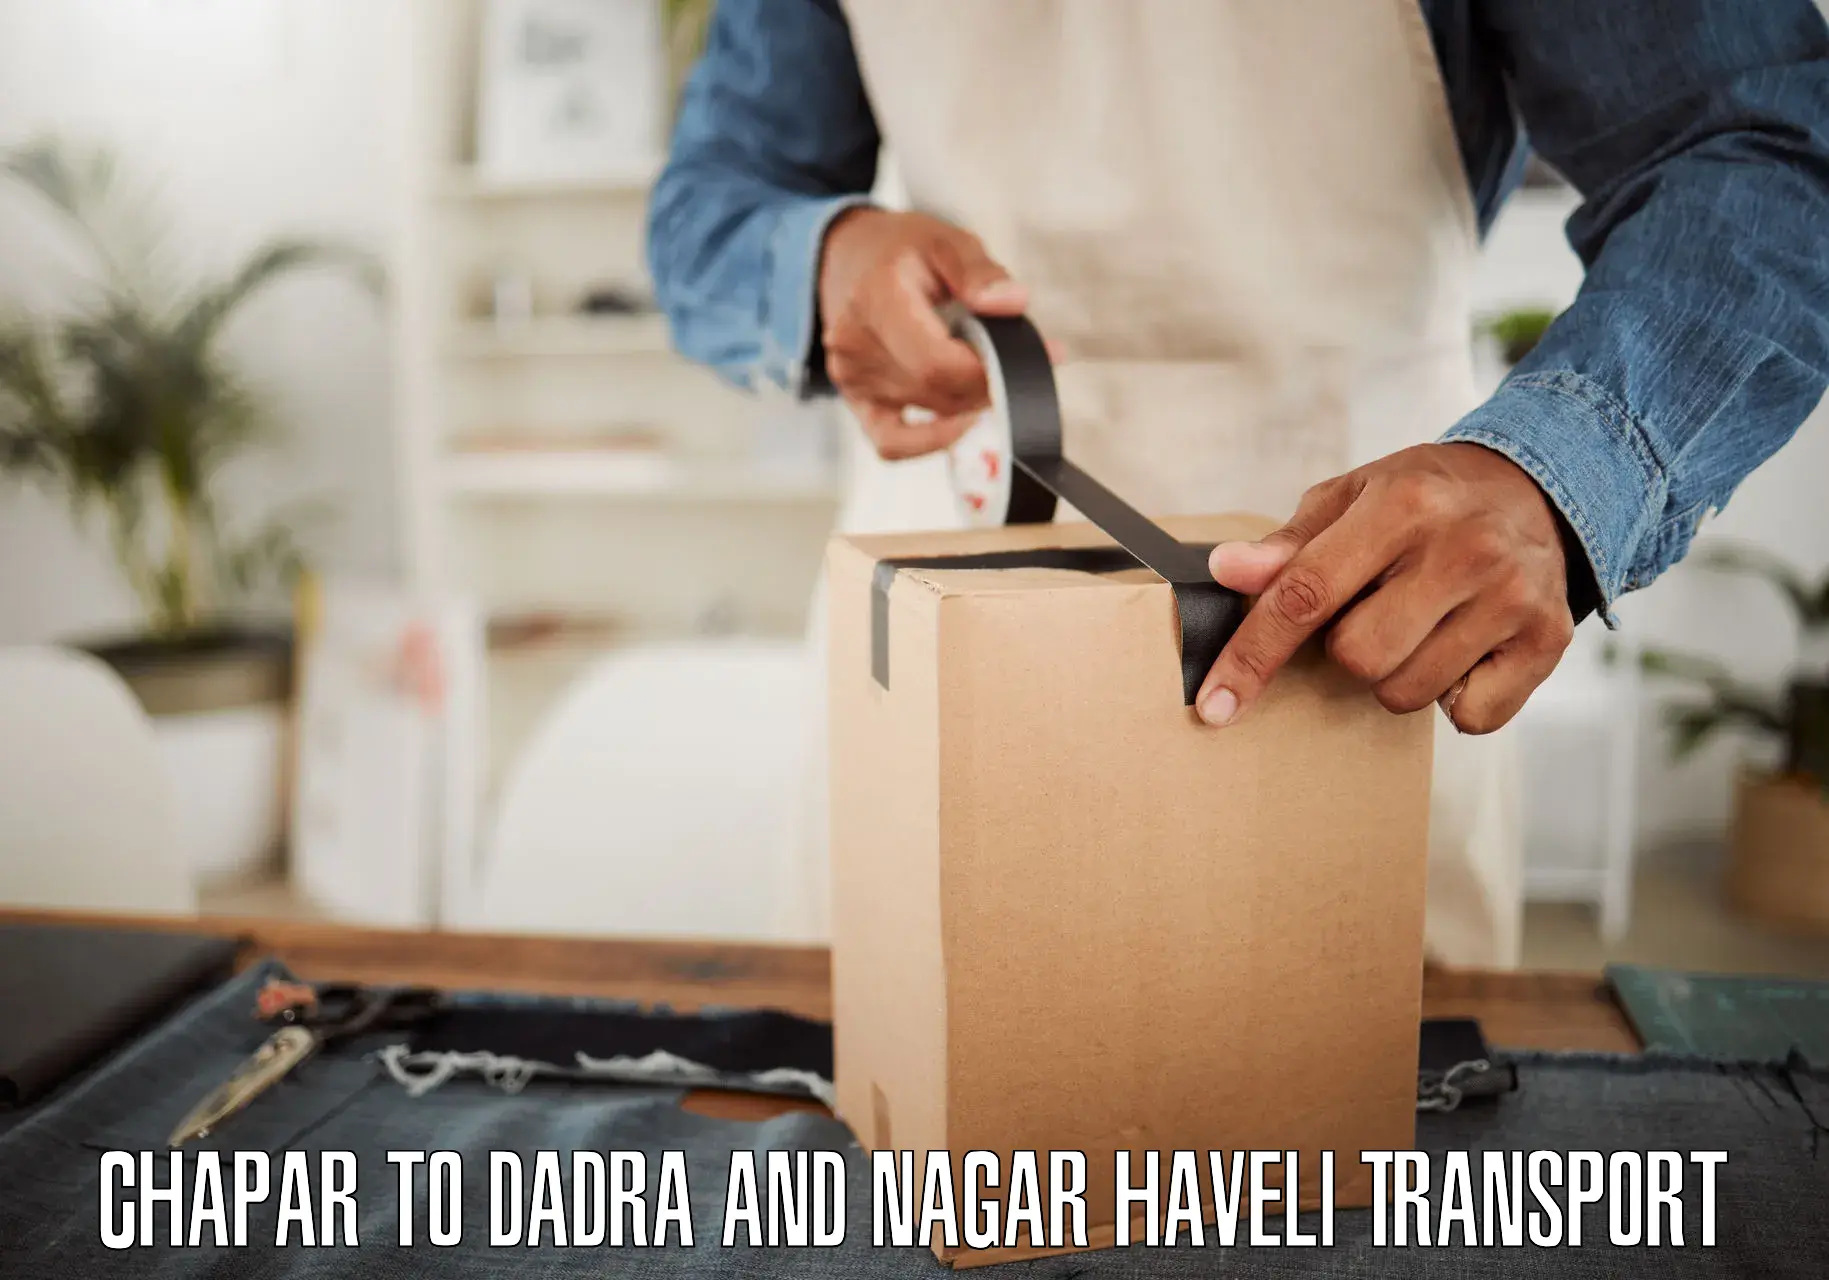 Delivery service Chapar to Dadra and Nagar Haveli